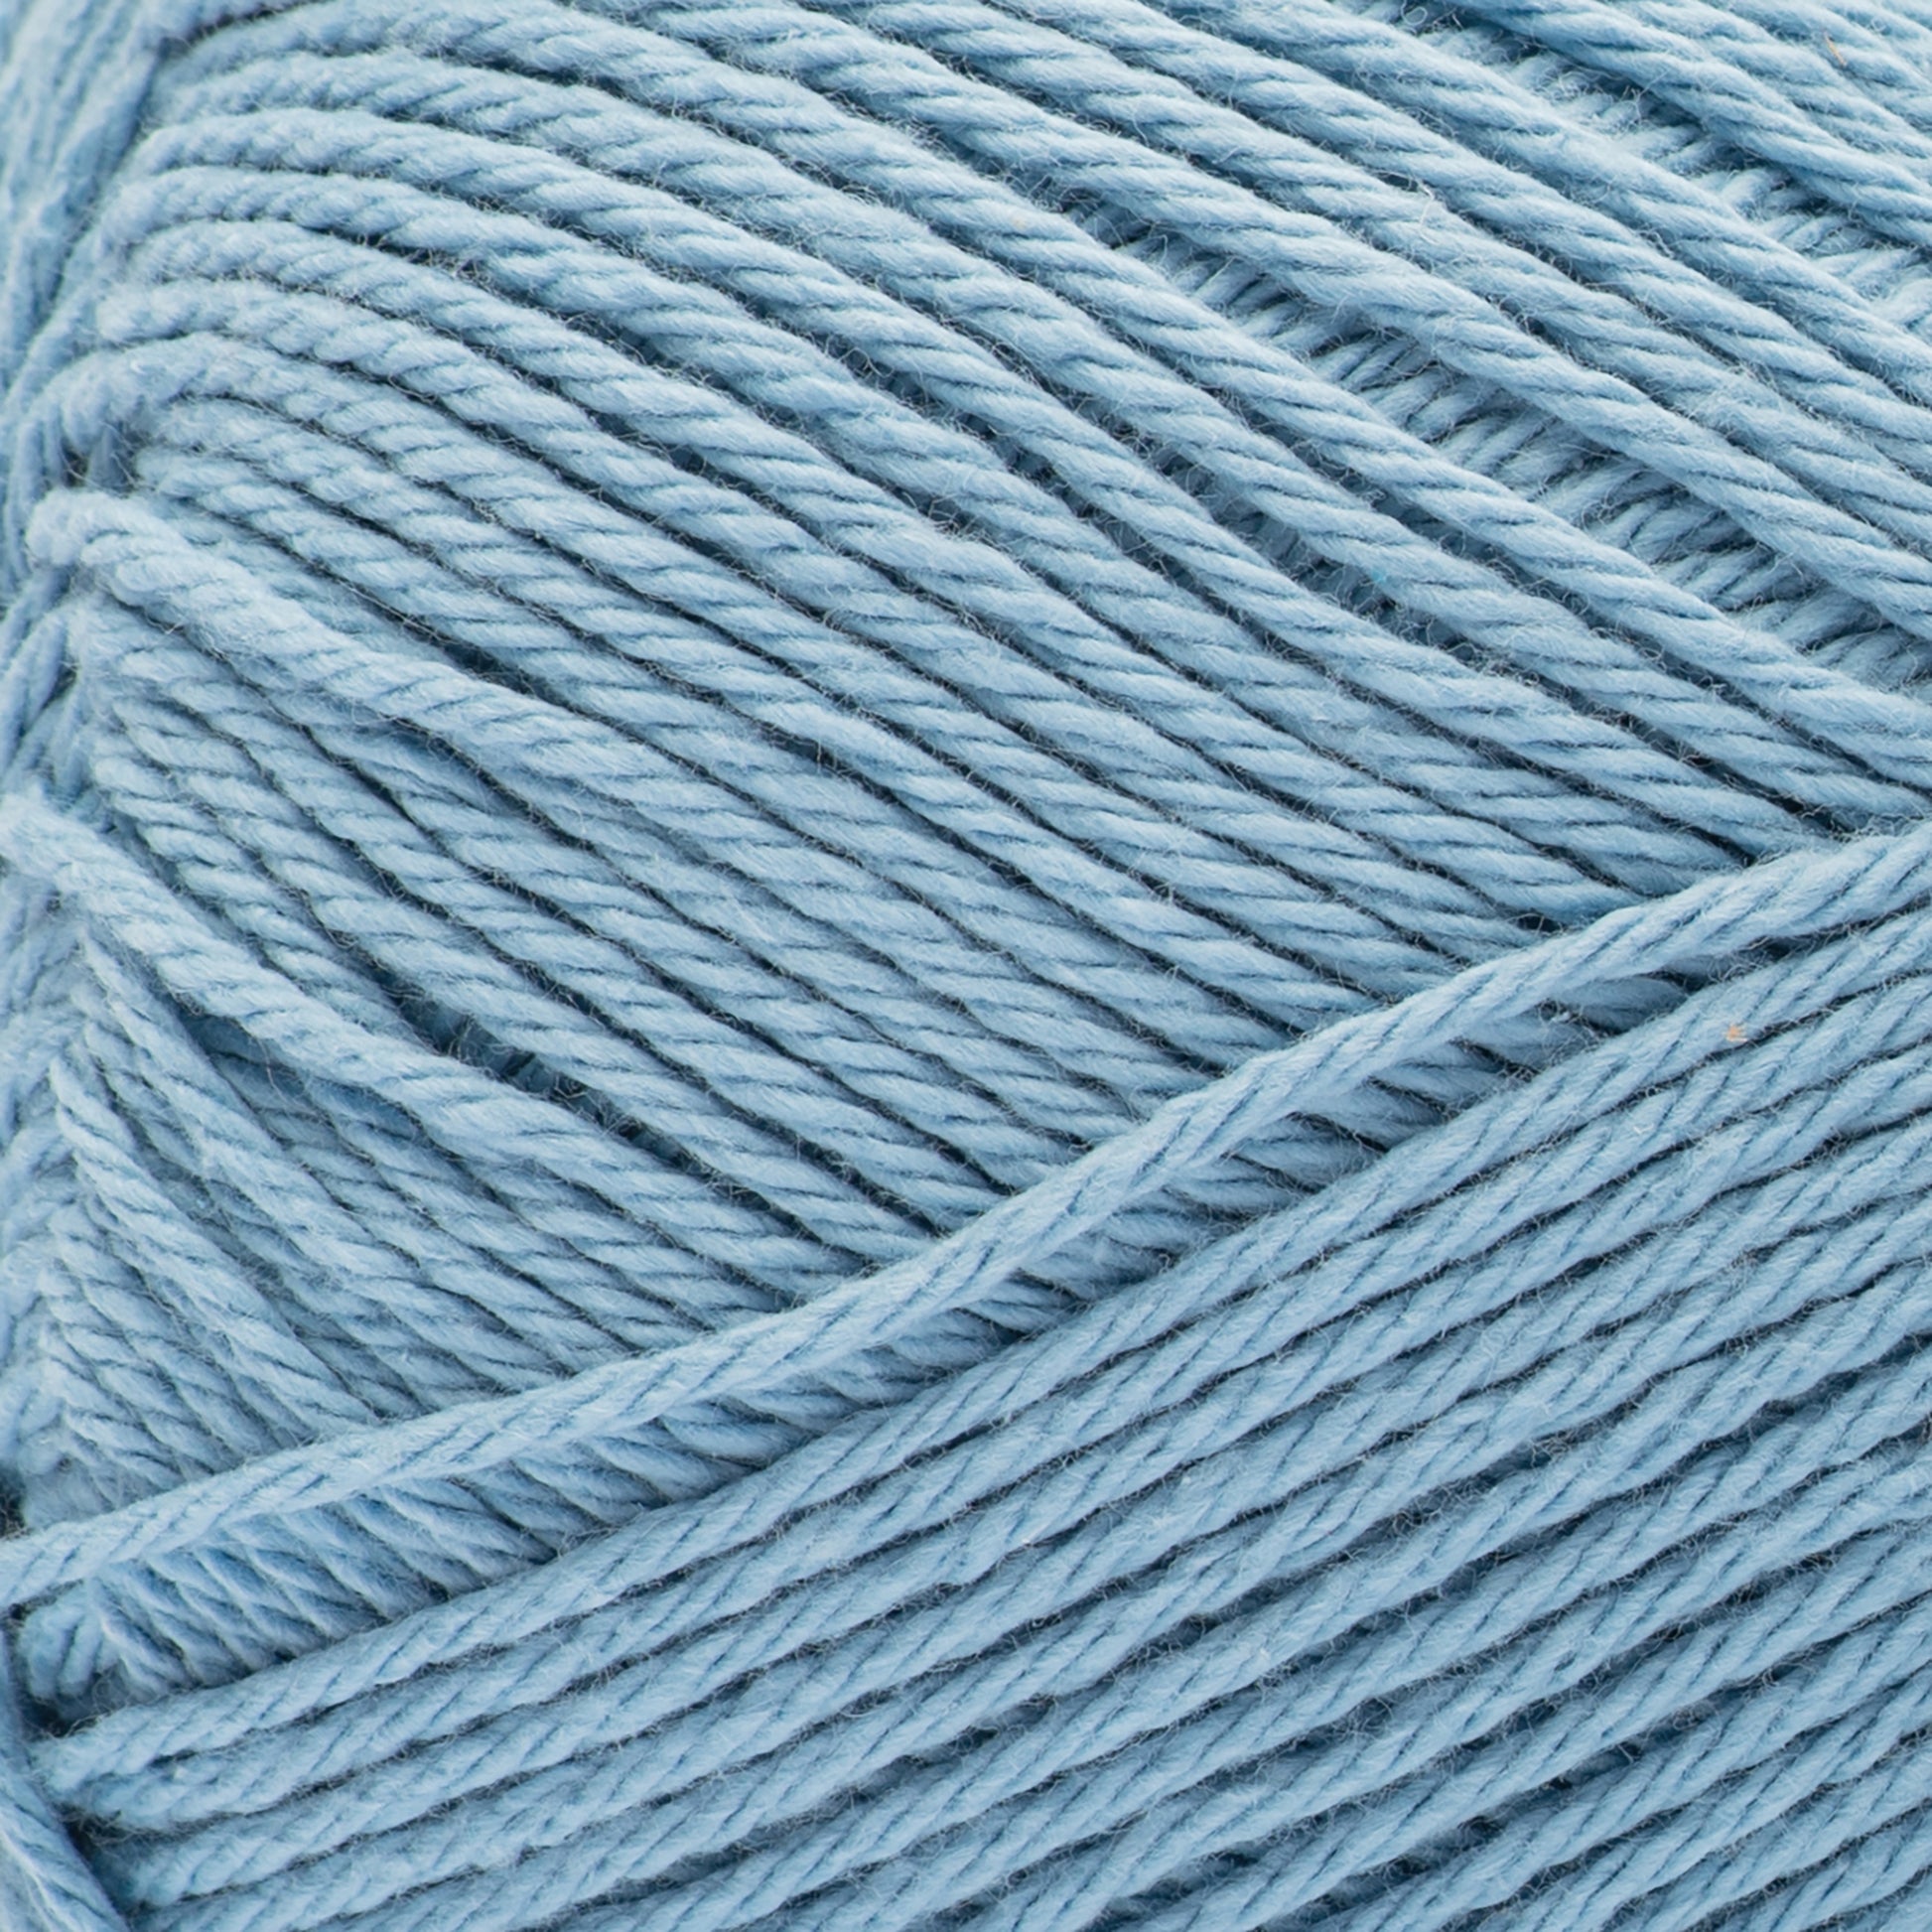 Bernat Handicrafter Cotton Yarn (400g/14oz) French Blue